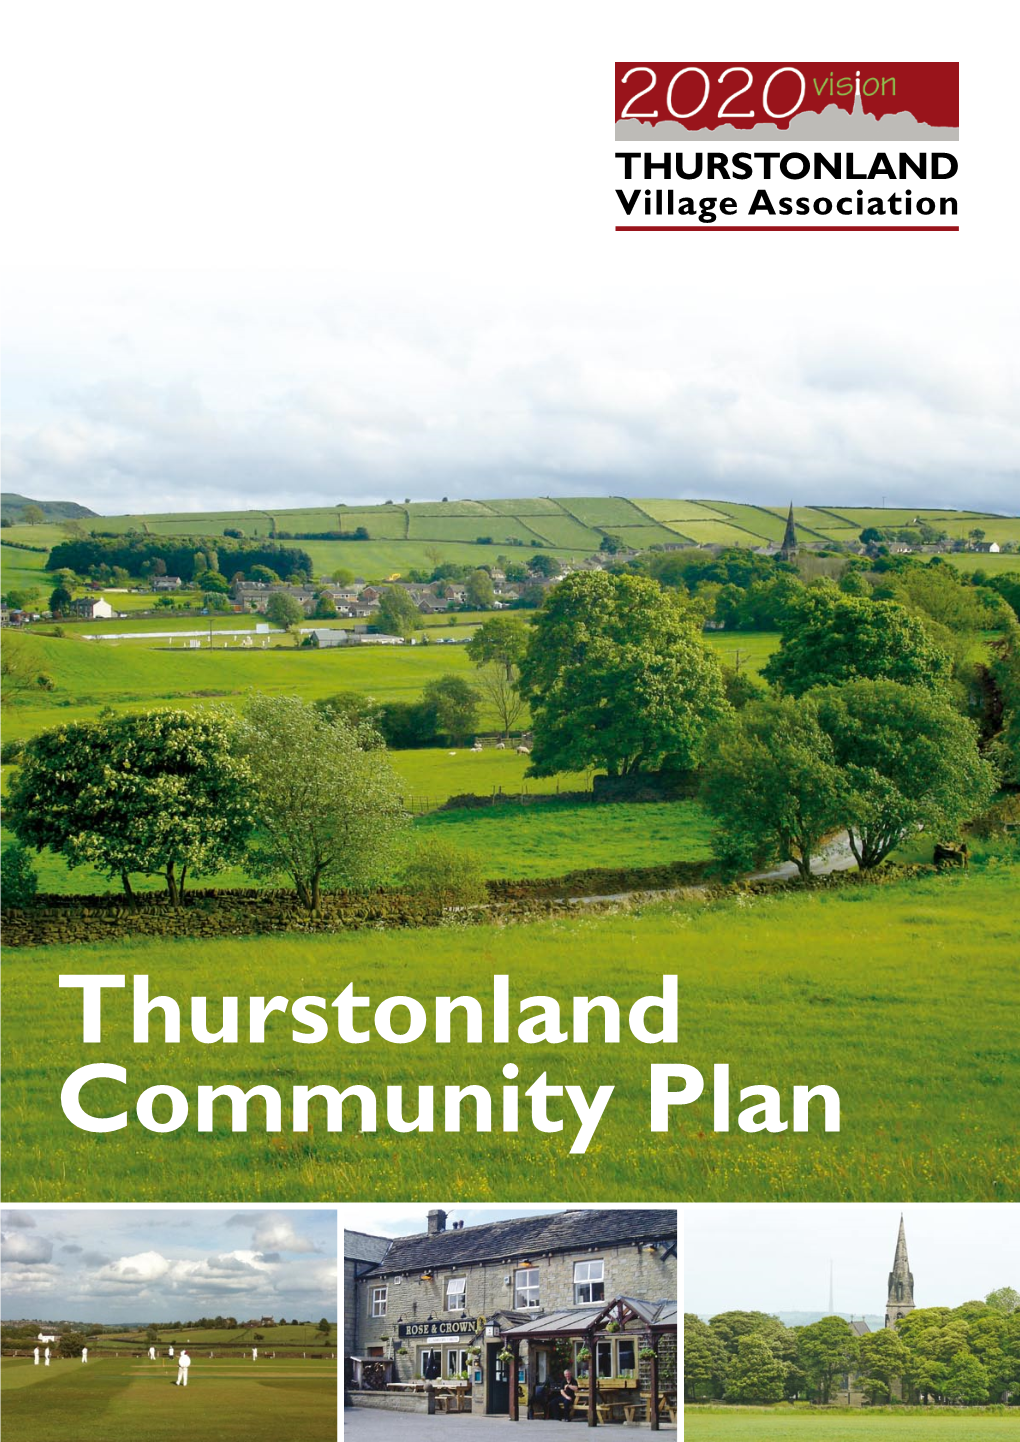 Thurstonland Community Plan Foreword